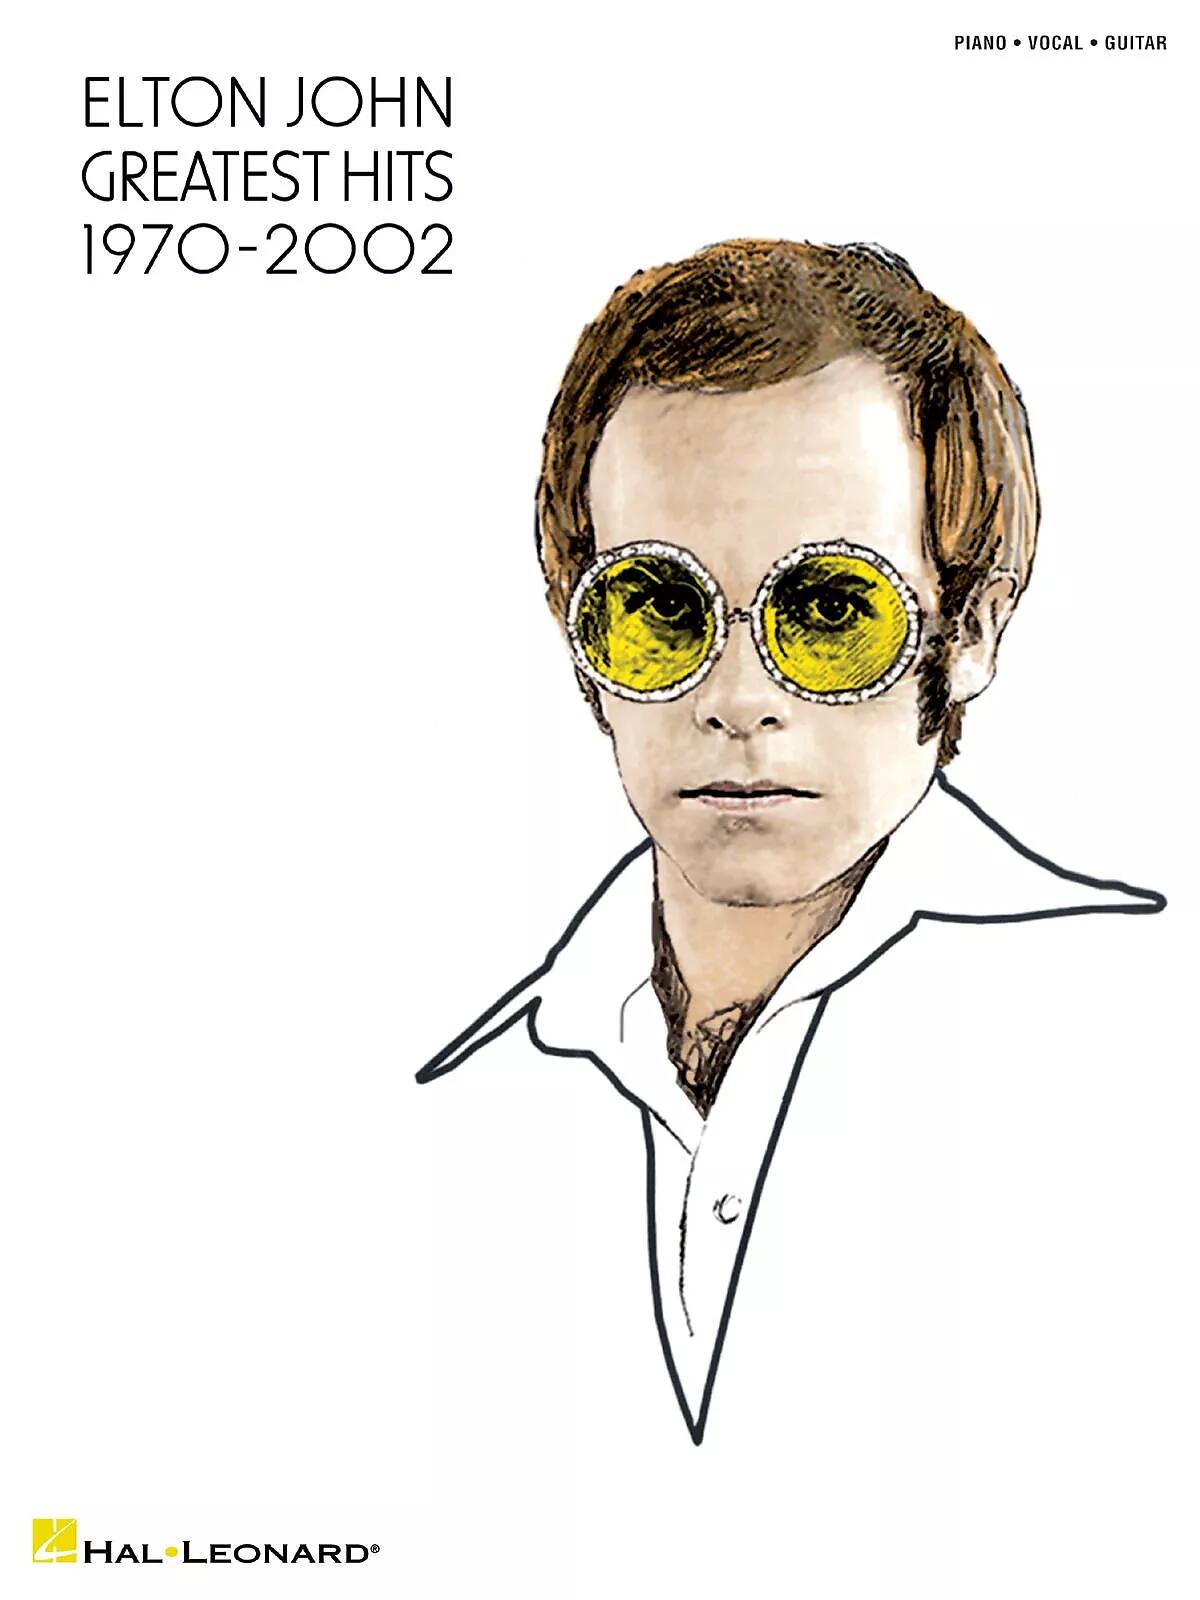 Elton John - Greatest Hits 1970-2002 : photo 1